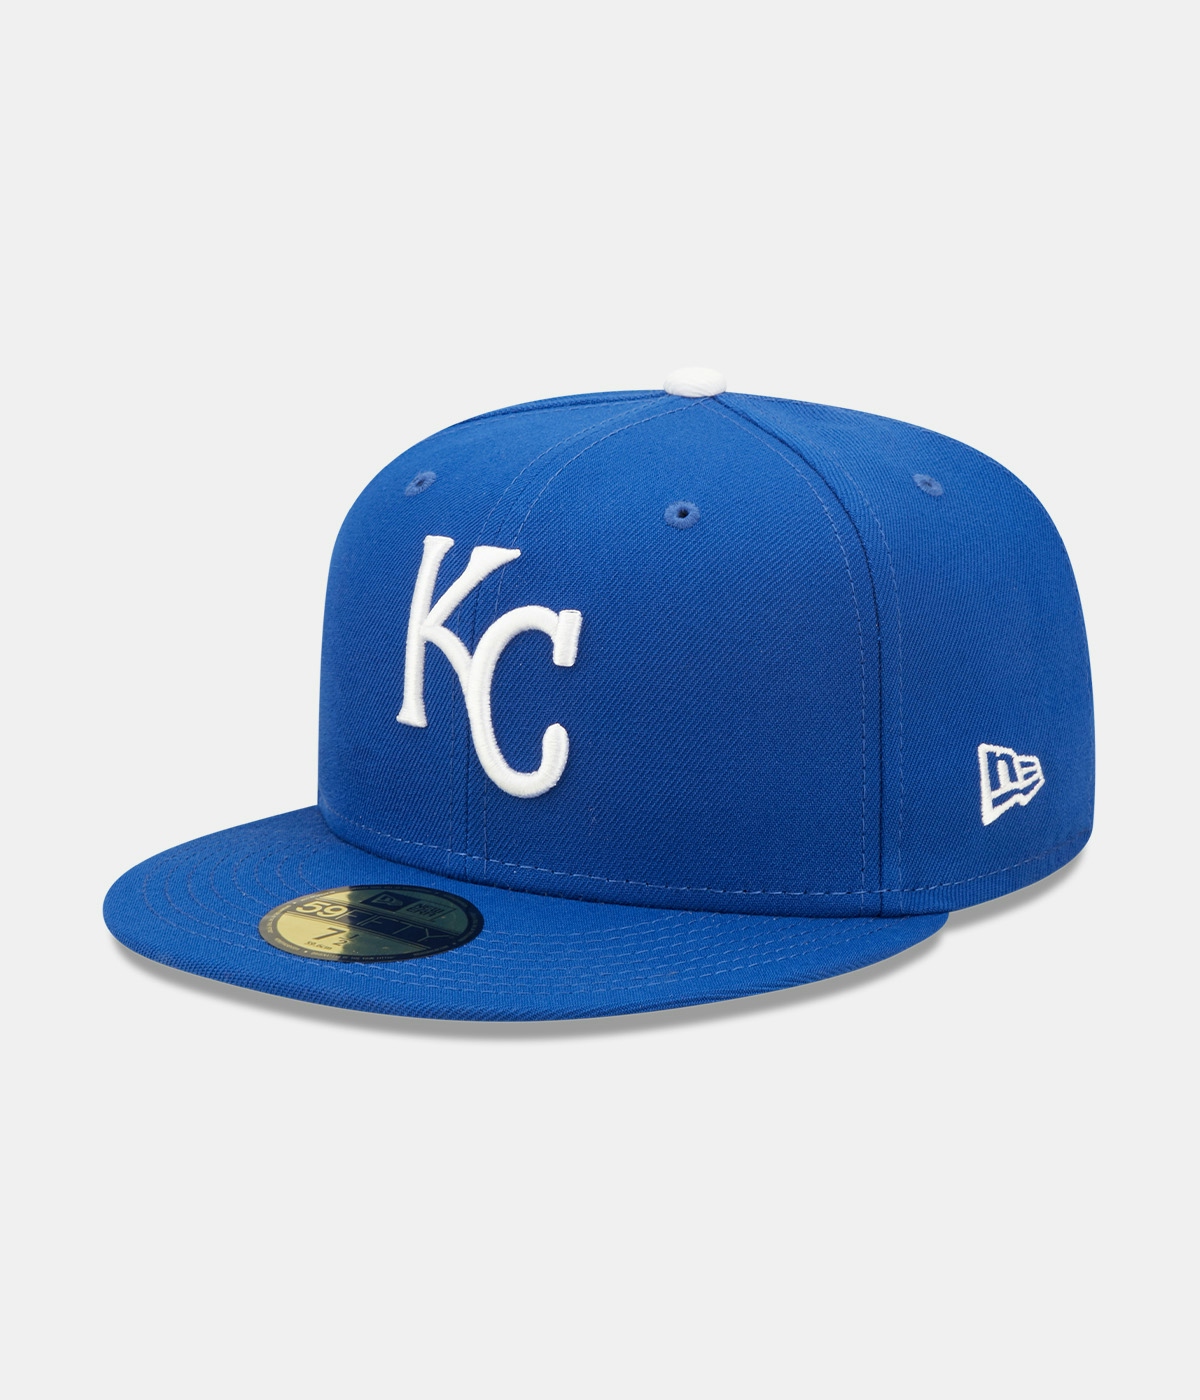 New Era Ac Perf Kansas City Royals 5950 Cap Blue 1